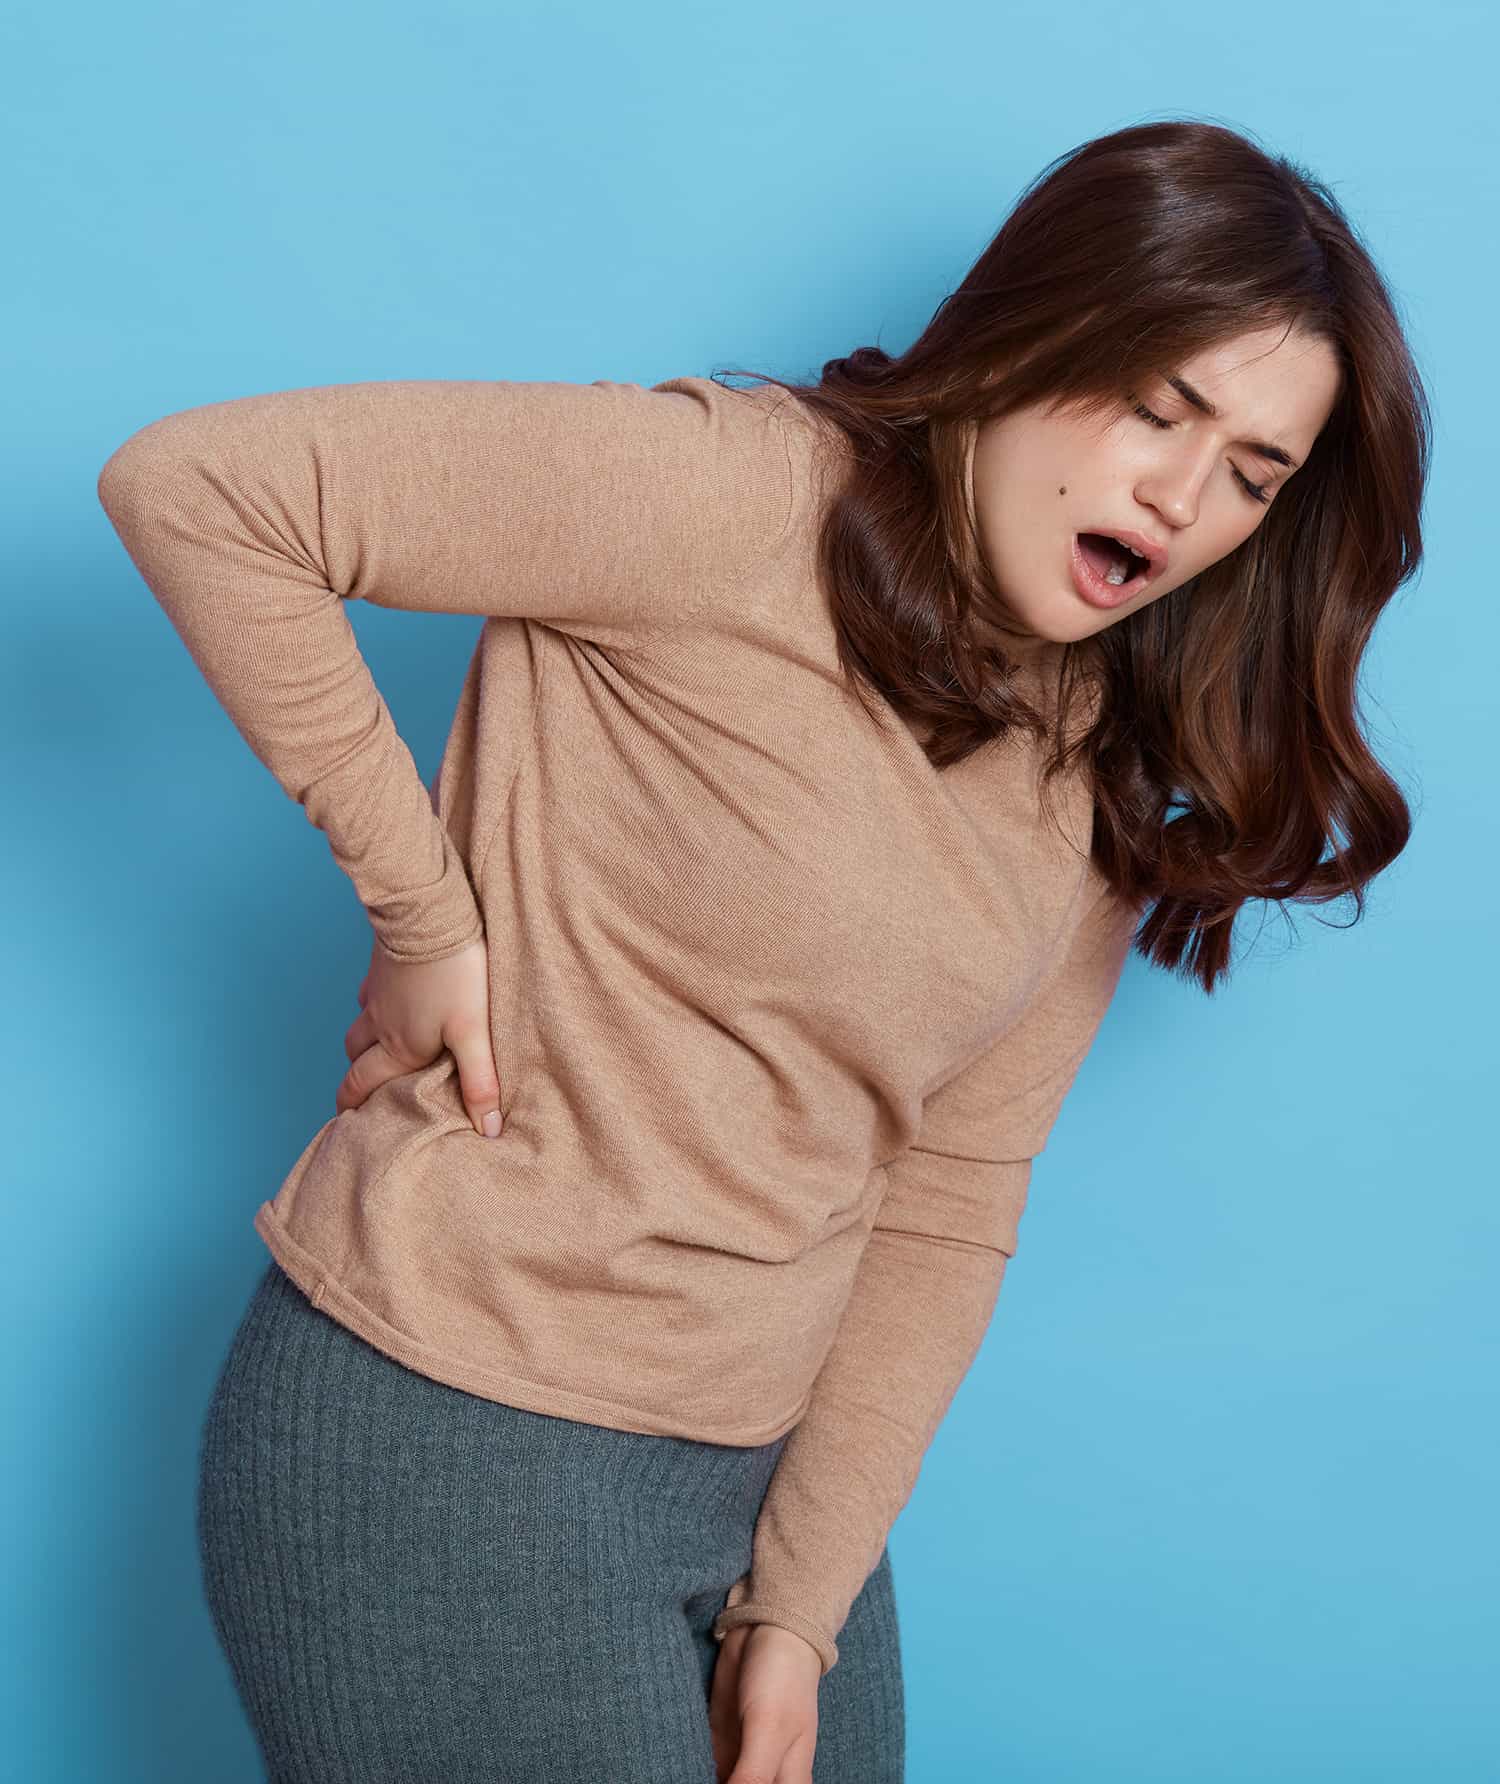 women strong back pain